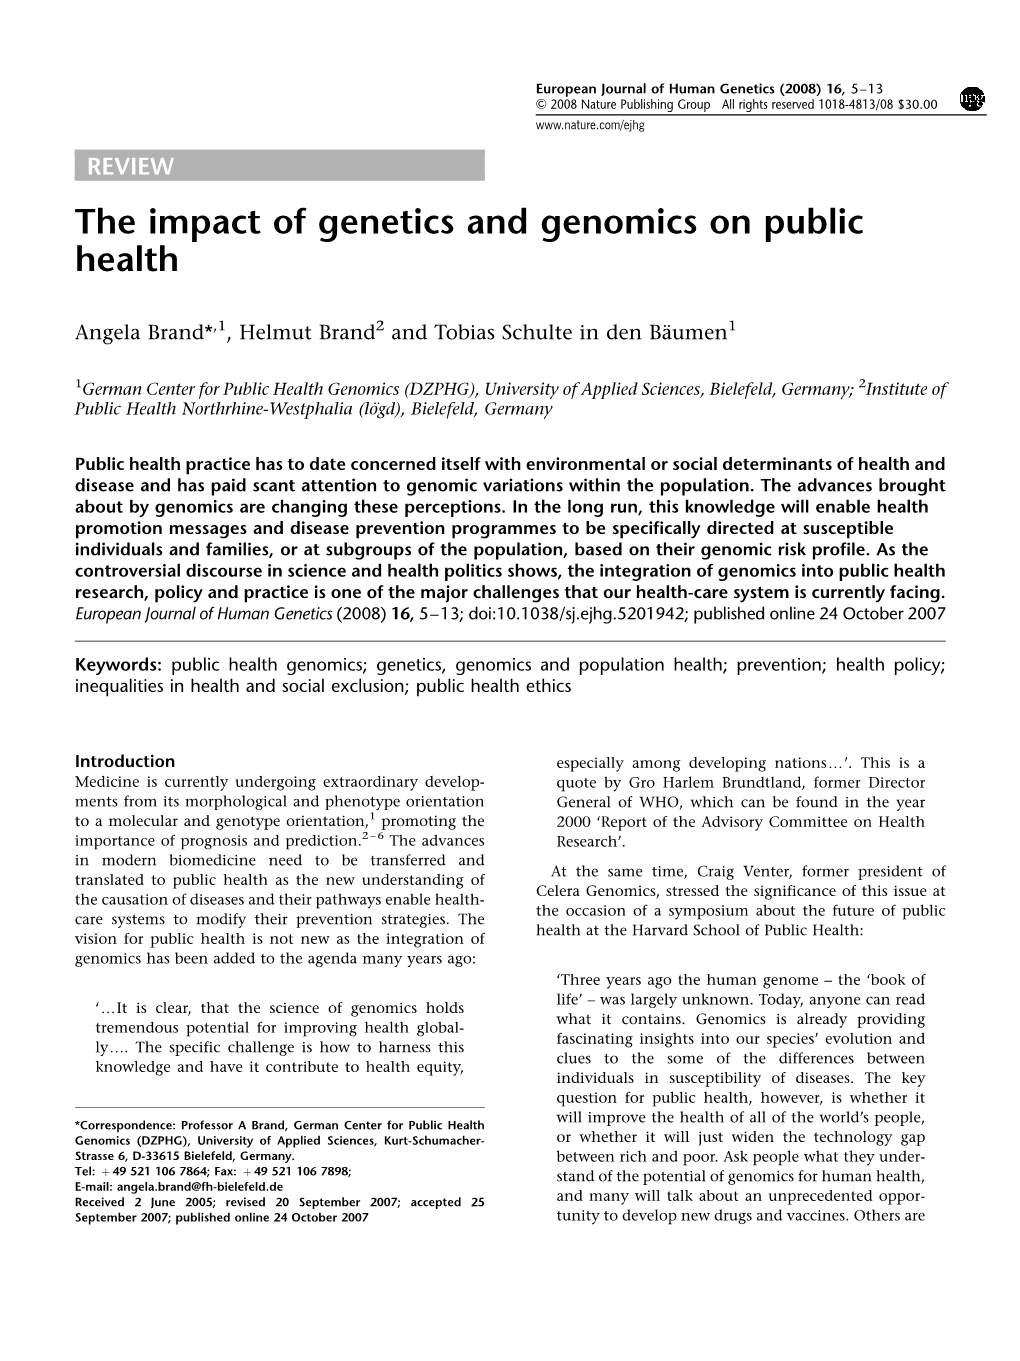 The Impact of Genetics and Genomics on Public Health